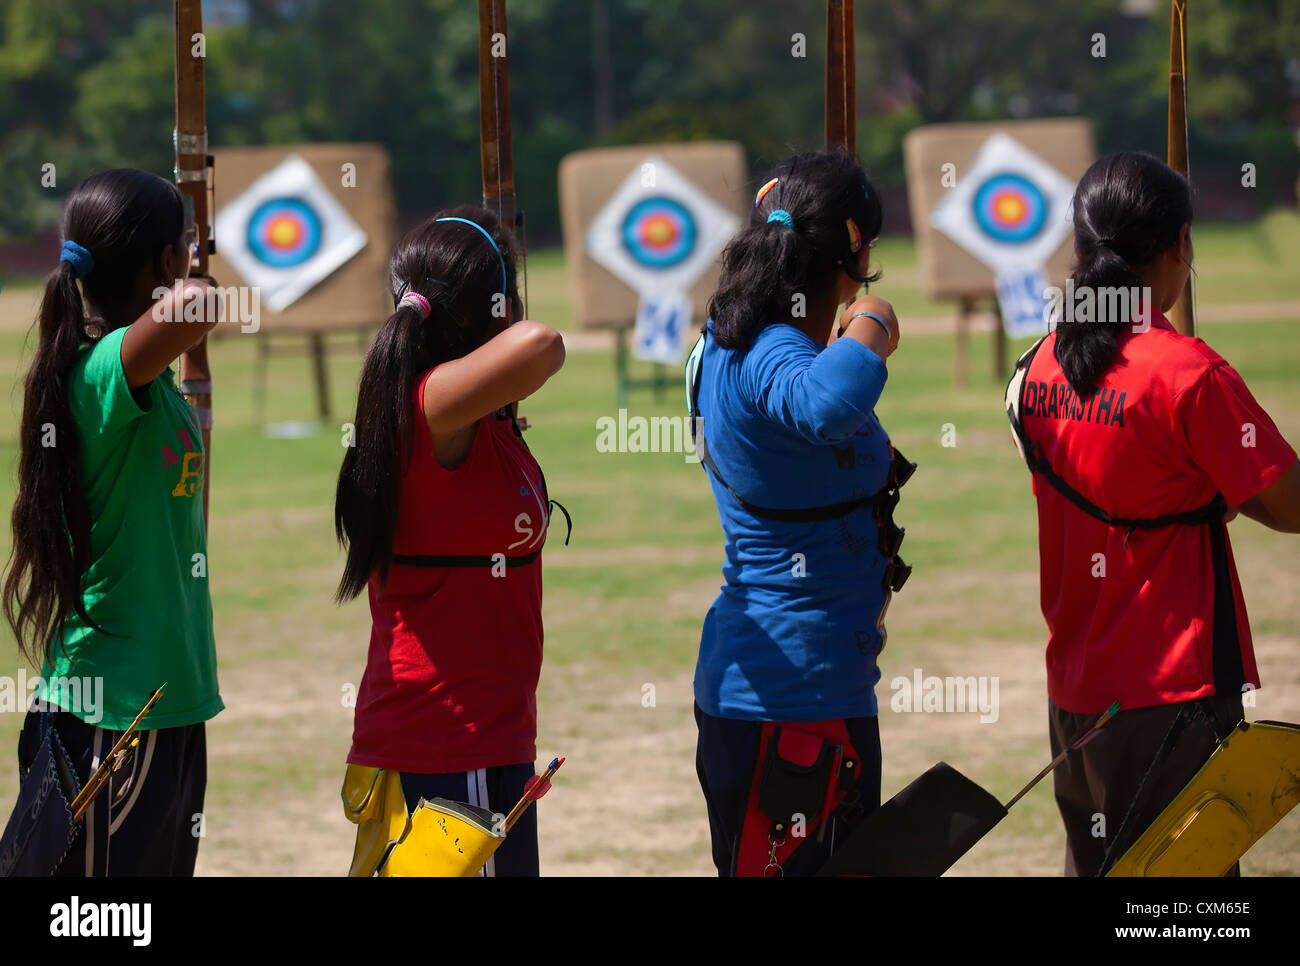 Archery compaction Stock Photo